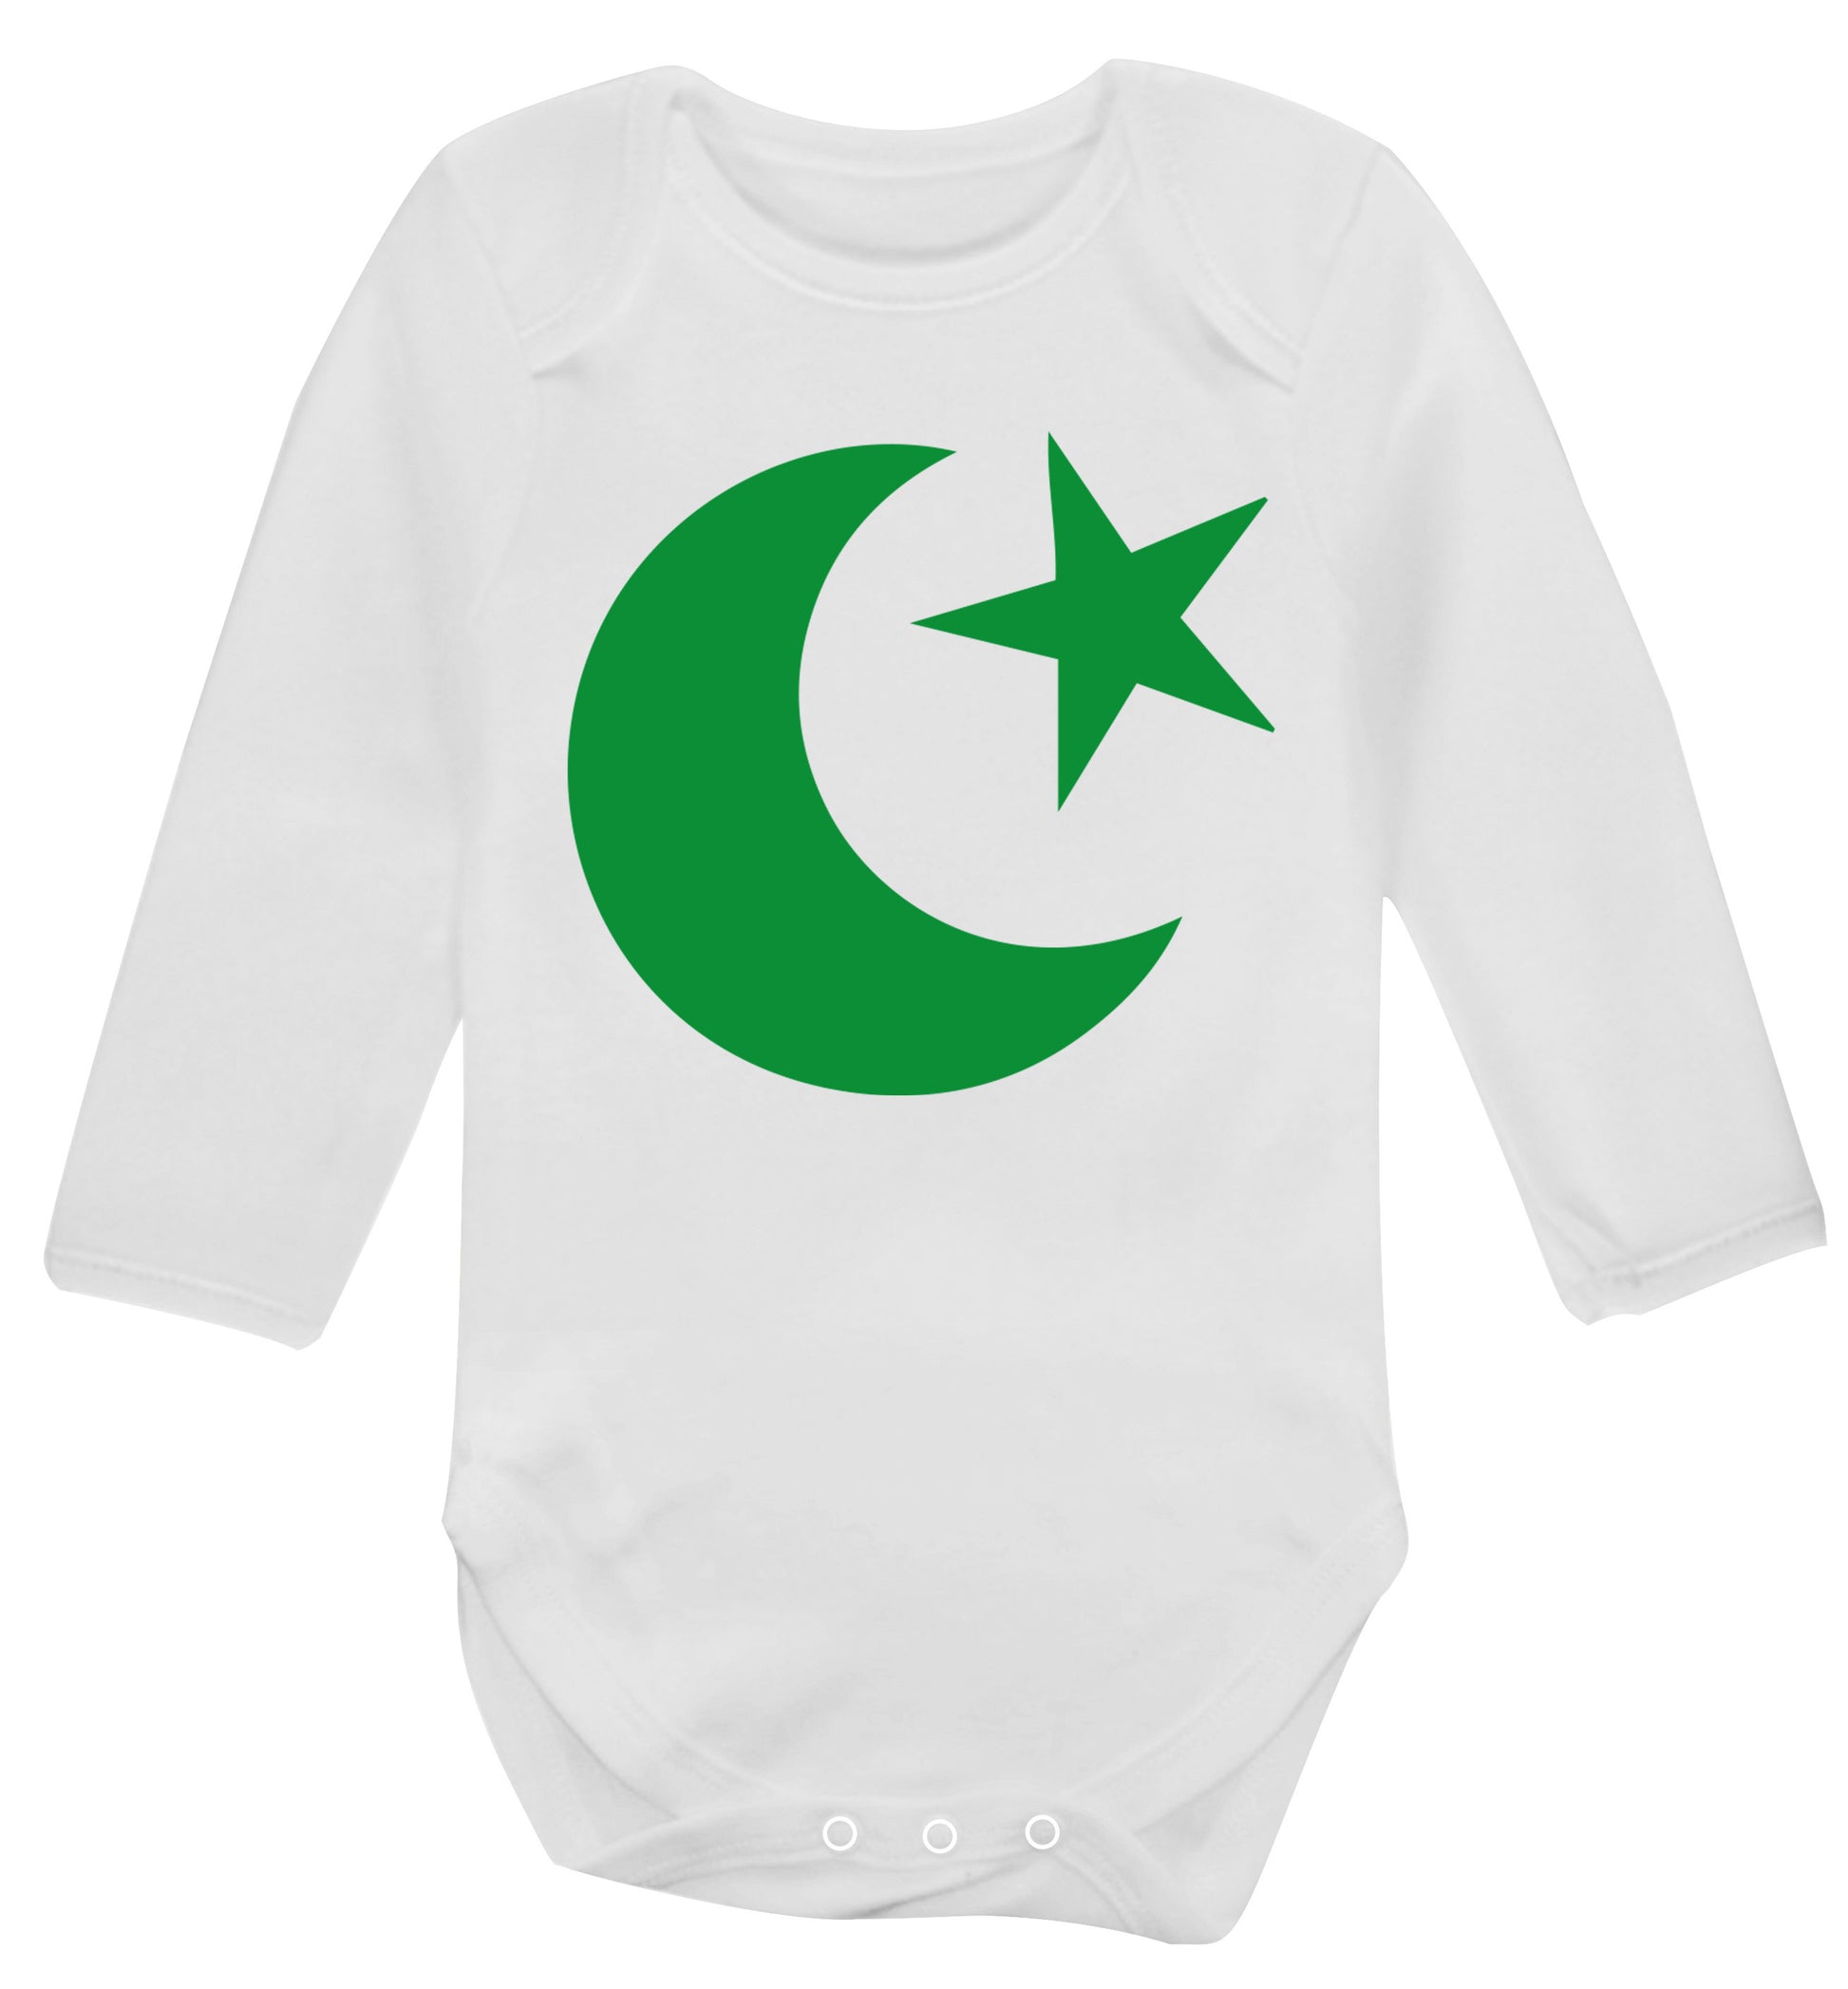 Eid Symbol Baby Vest long sleeved white 6-12 months